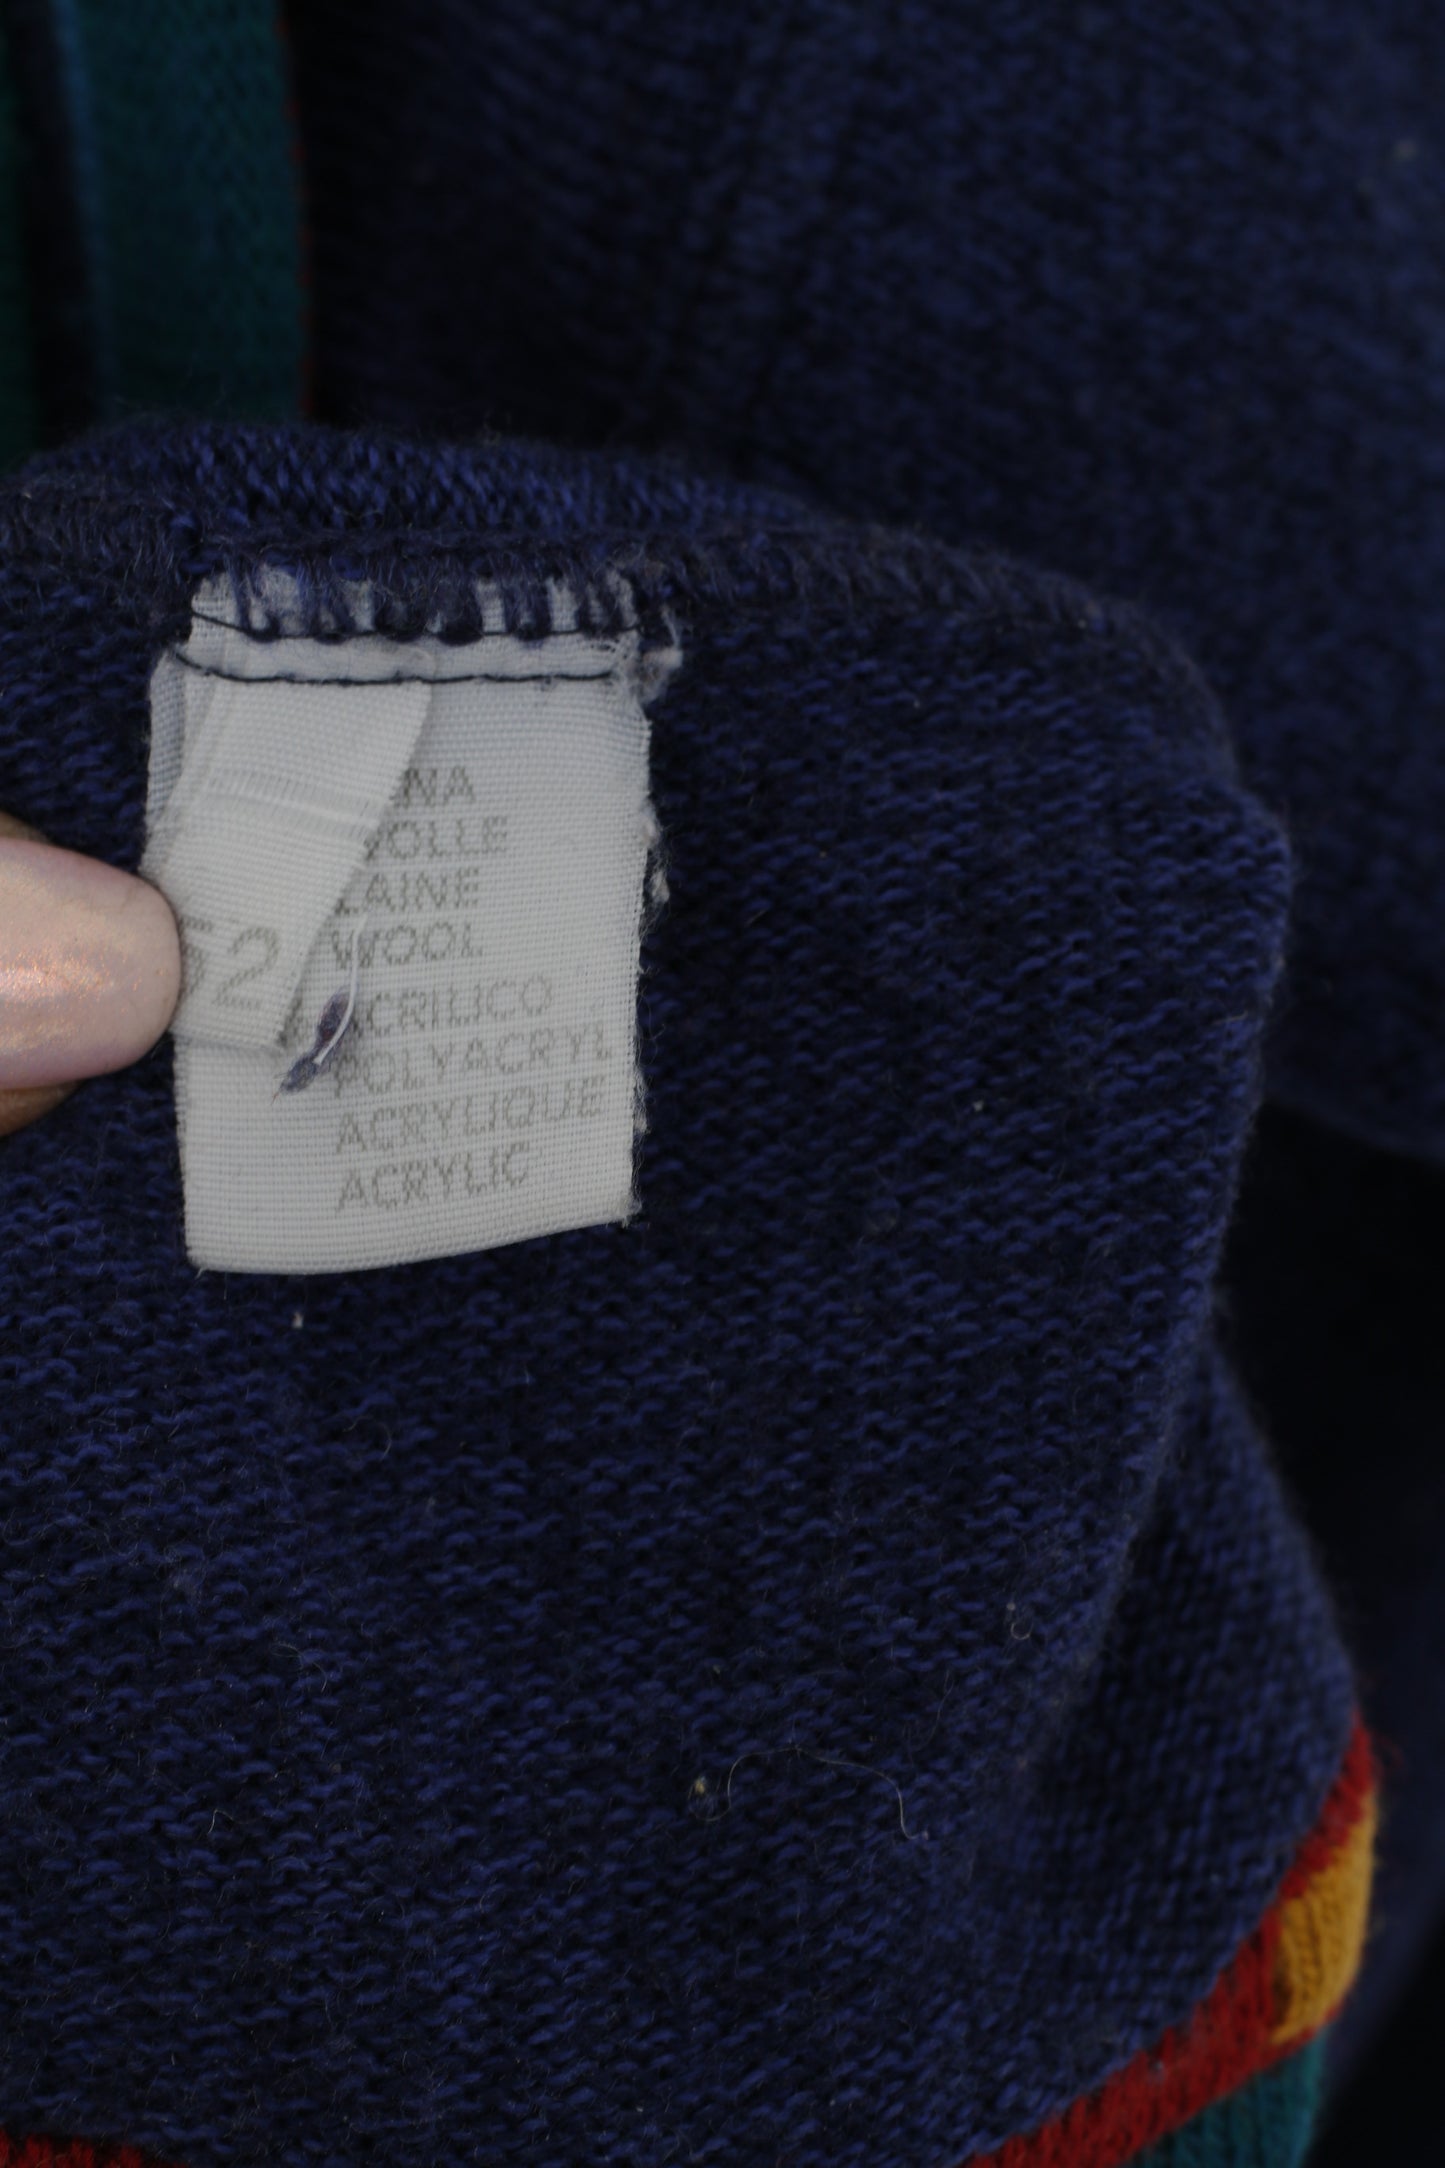 Engbers Men 52 L Jumper Blue Vintage Geometric Wool Italy Zip Neck Sweater